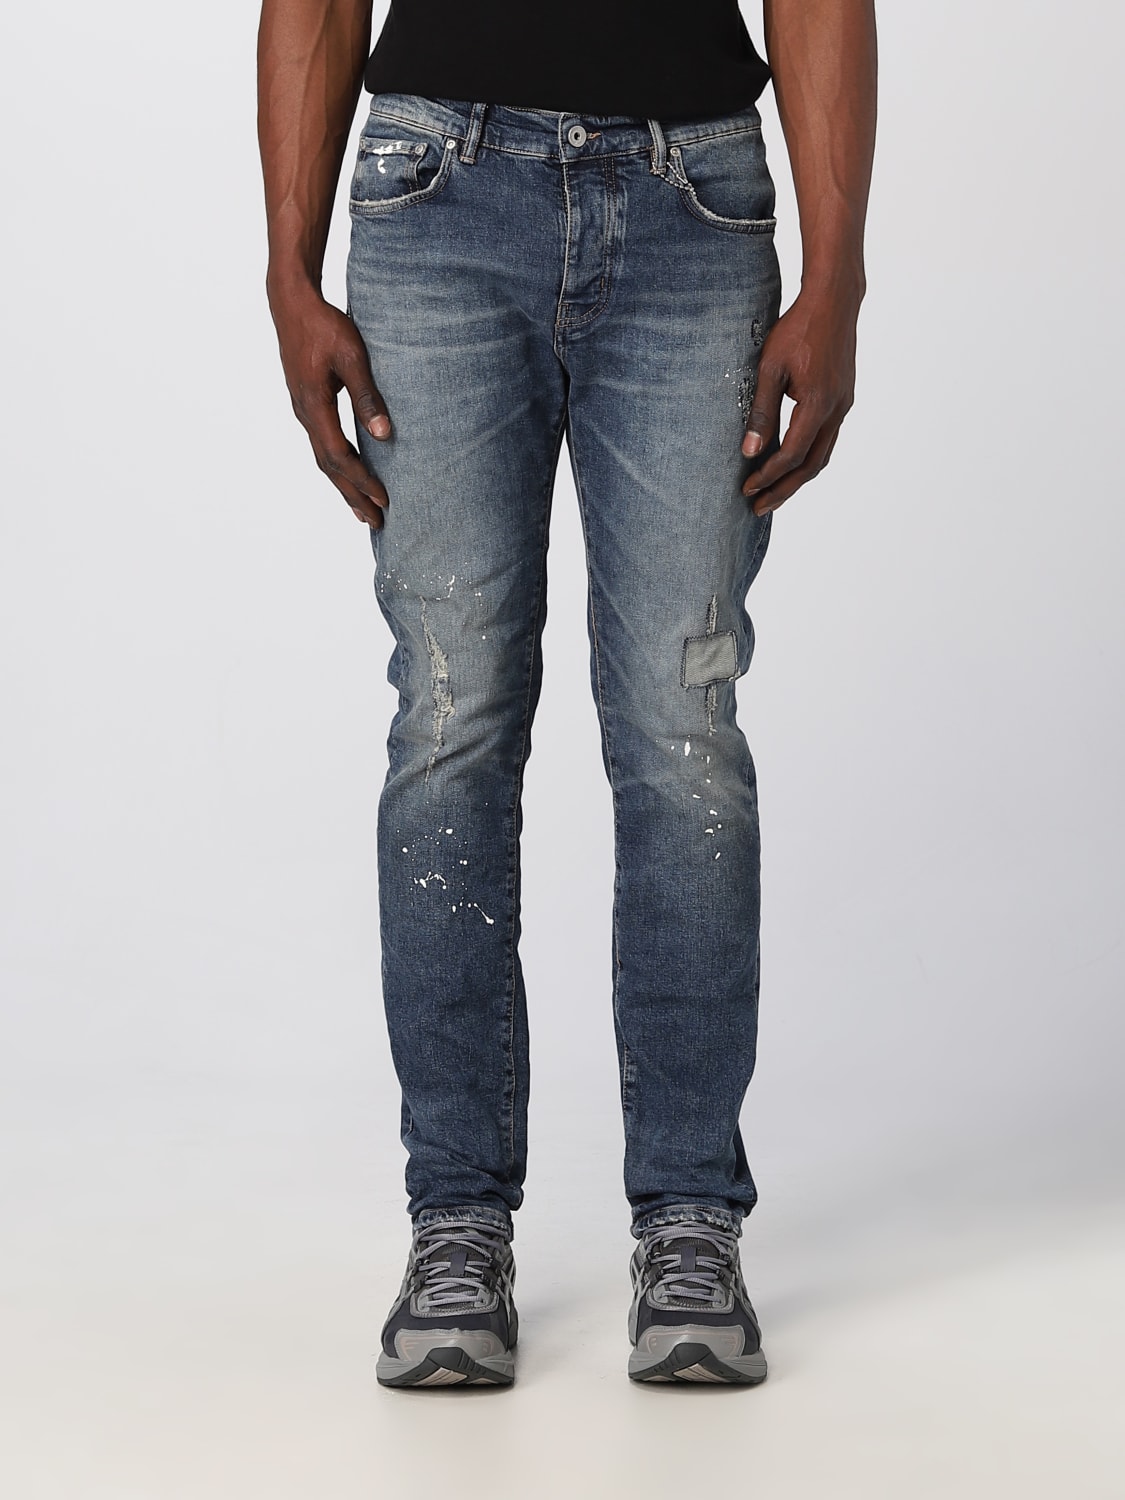 PURPLE BRAND Outlet: Jeans men - Black